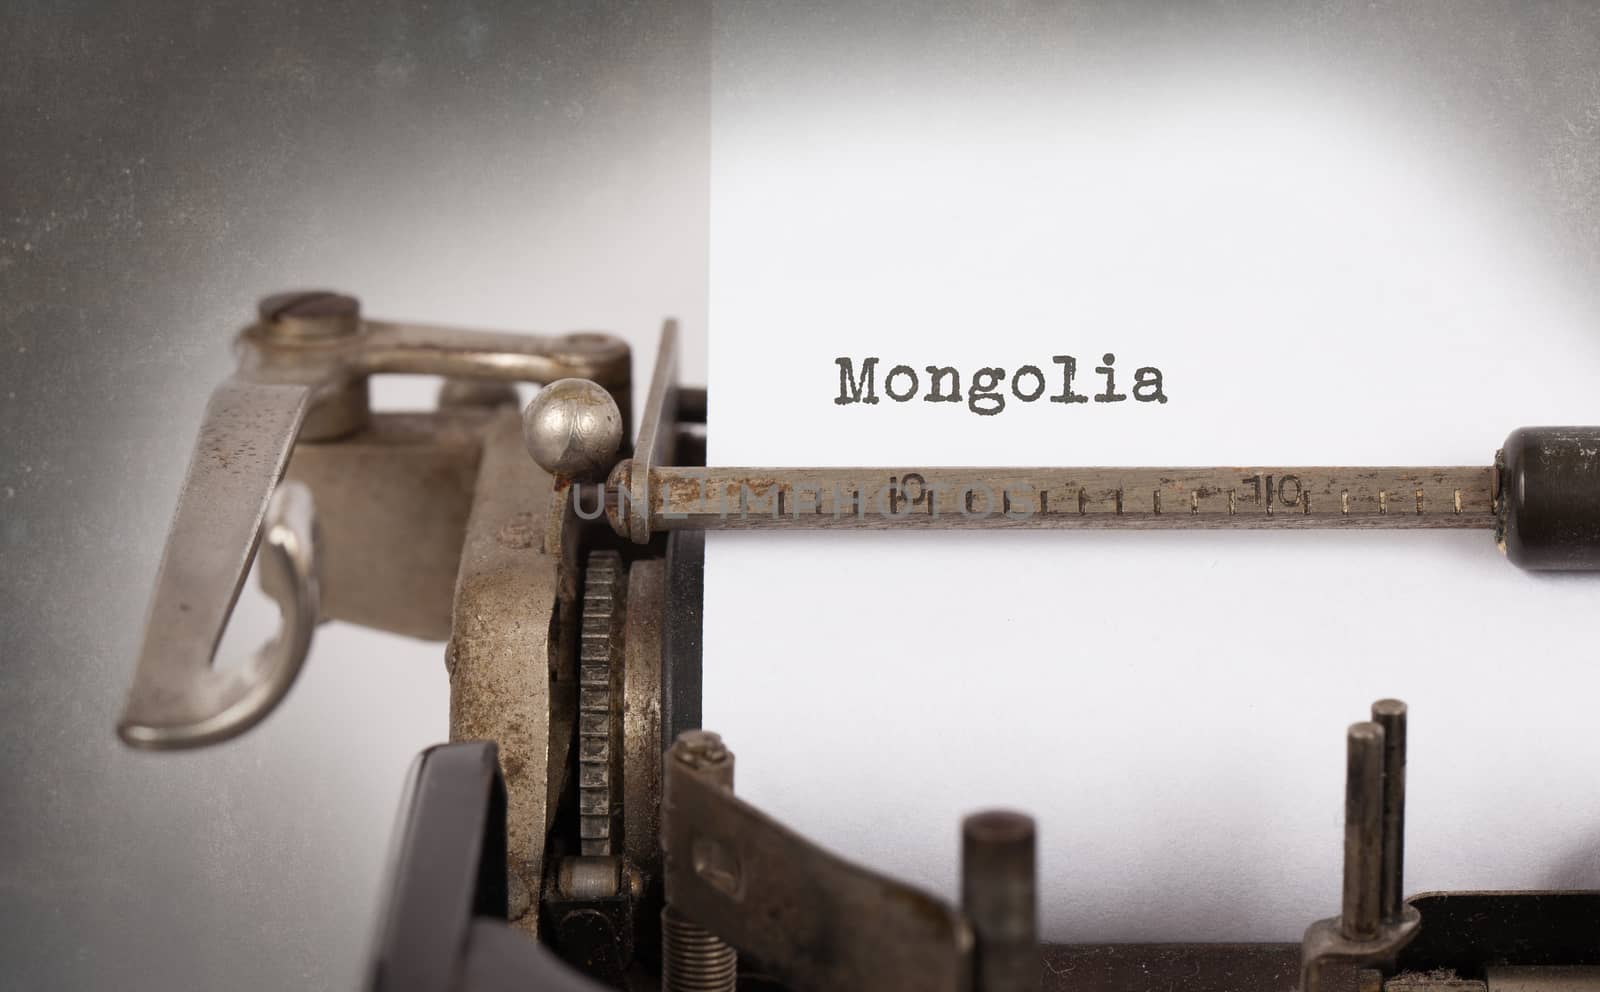 Old typewriter - Mongolia by michaklootwijk